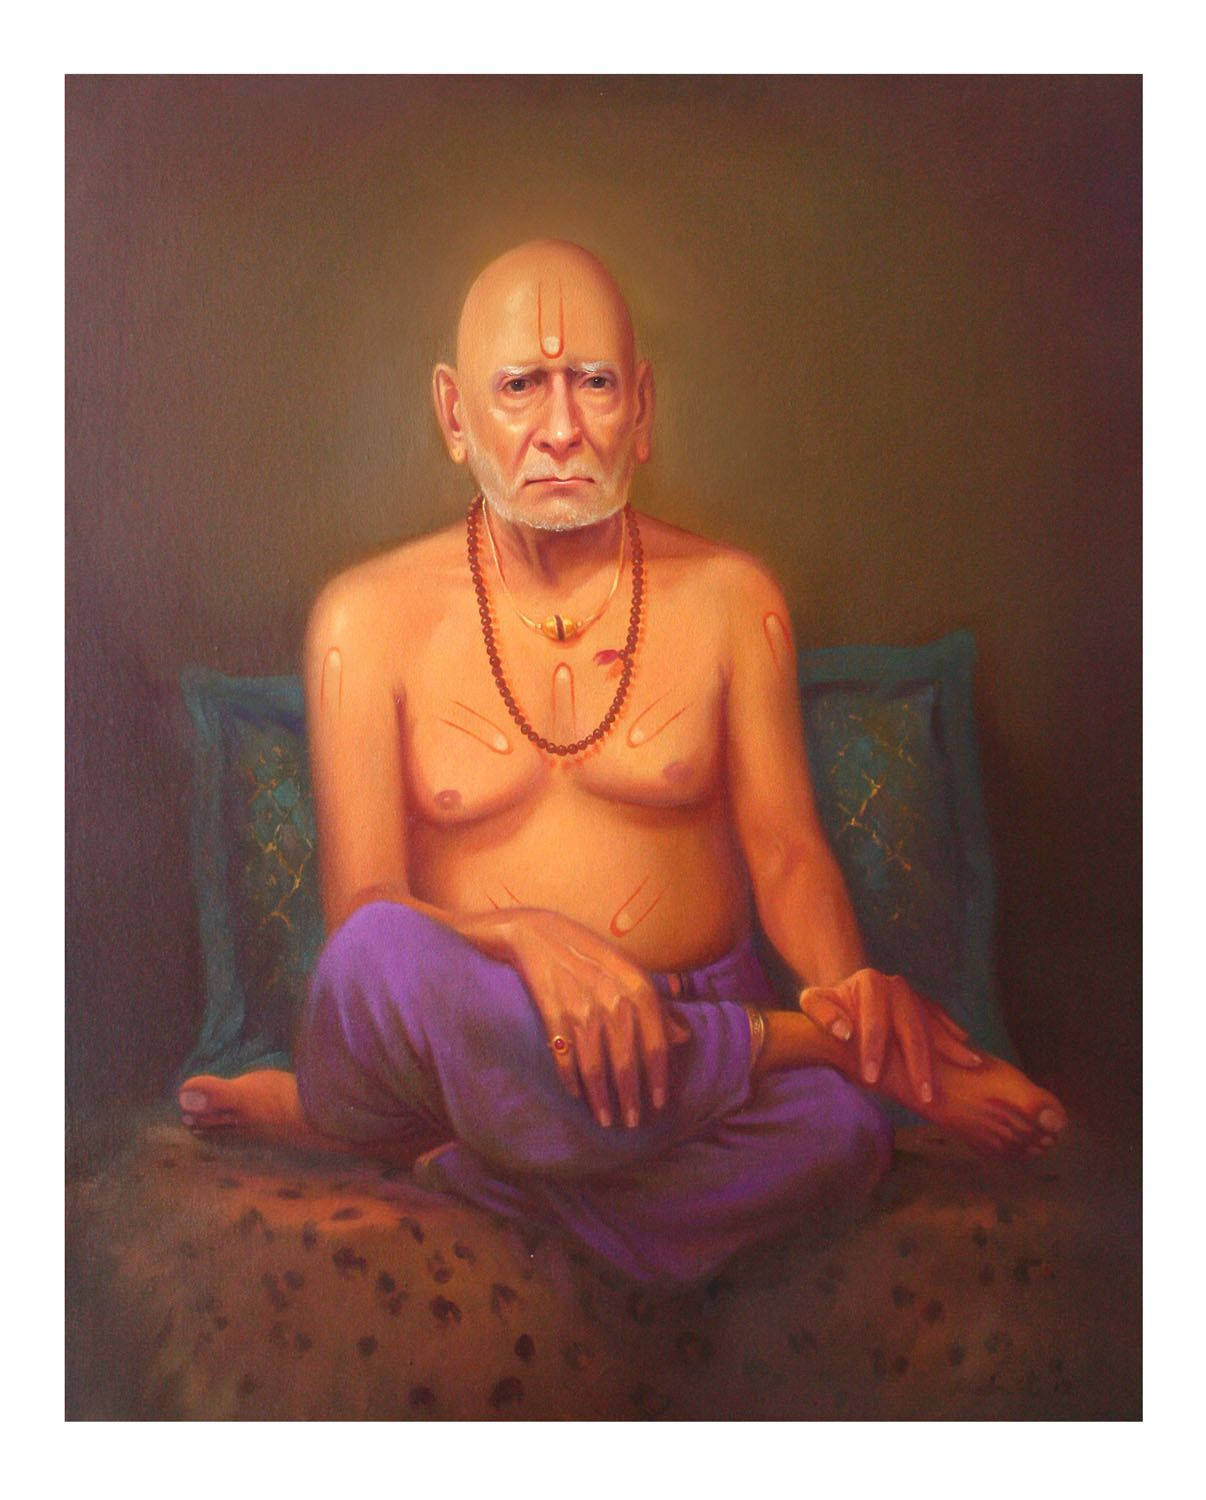 Free Shri Swami Samarth Wallpaper Downloads, [100+] Shri Swami Samarth  Wallpapers for FREE 